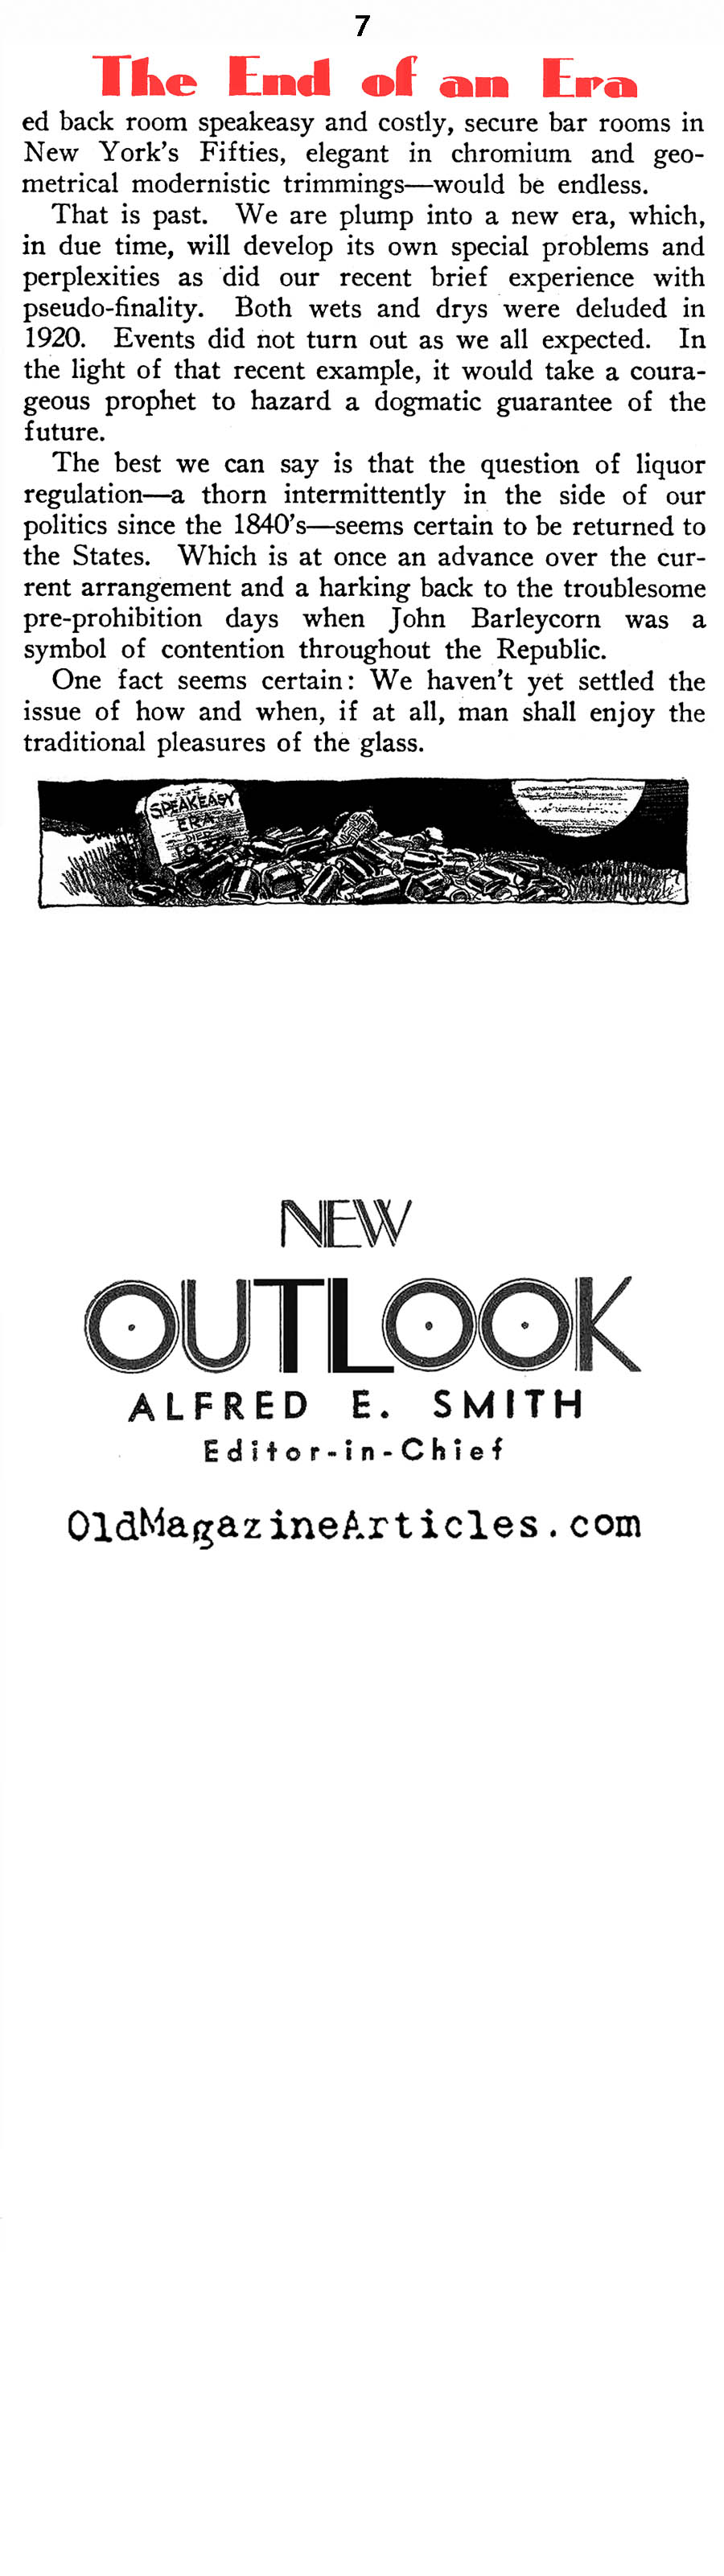 An Era's End (New Outlook Magazine, 1932)